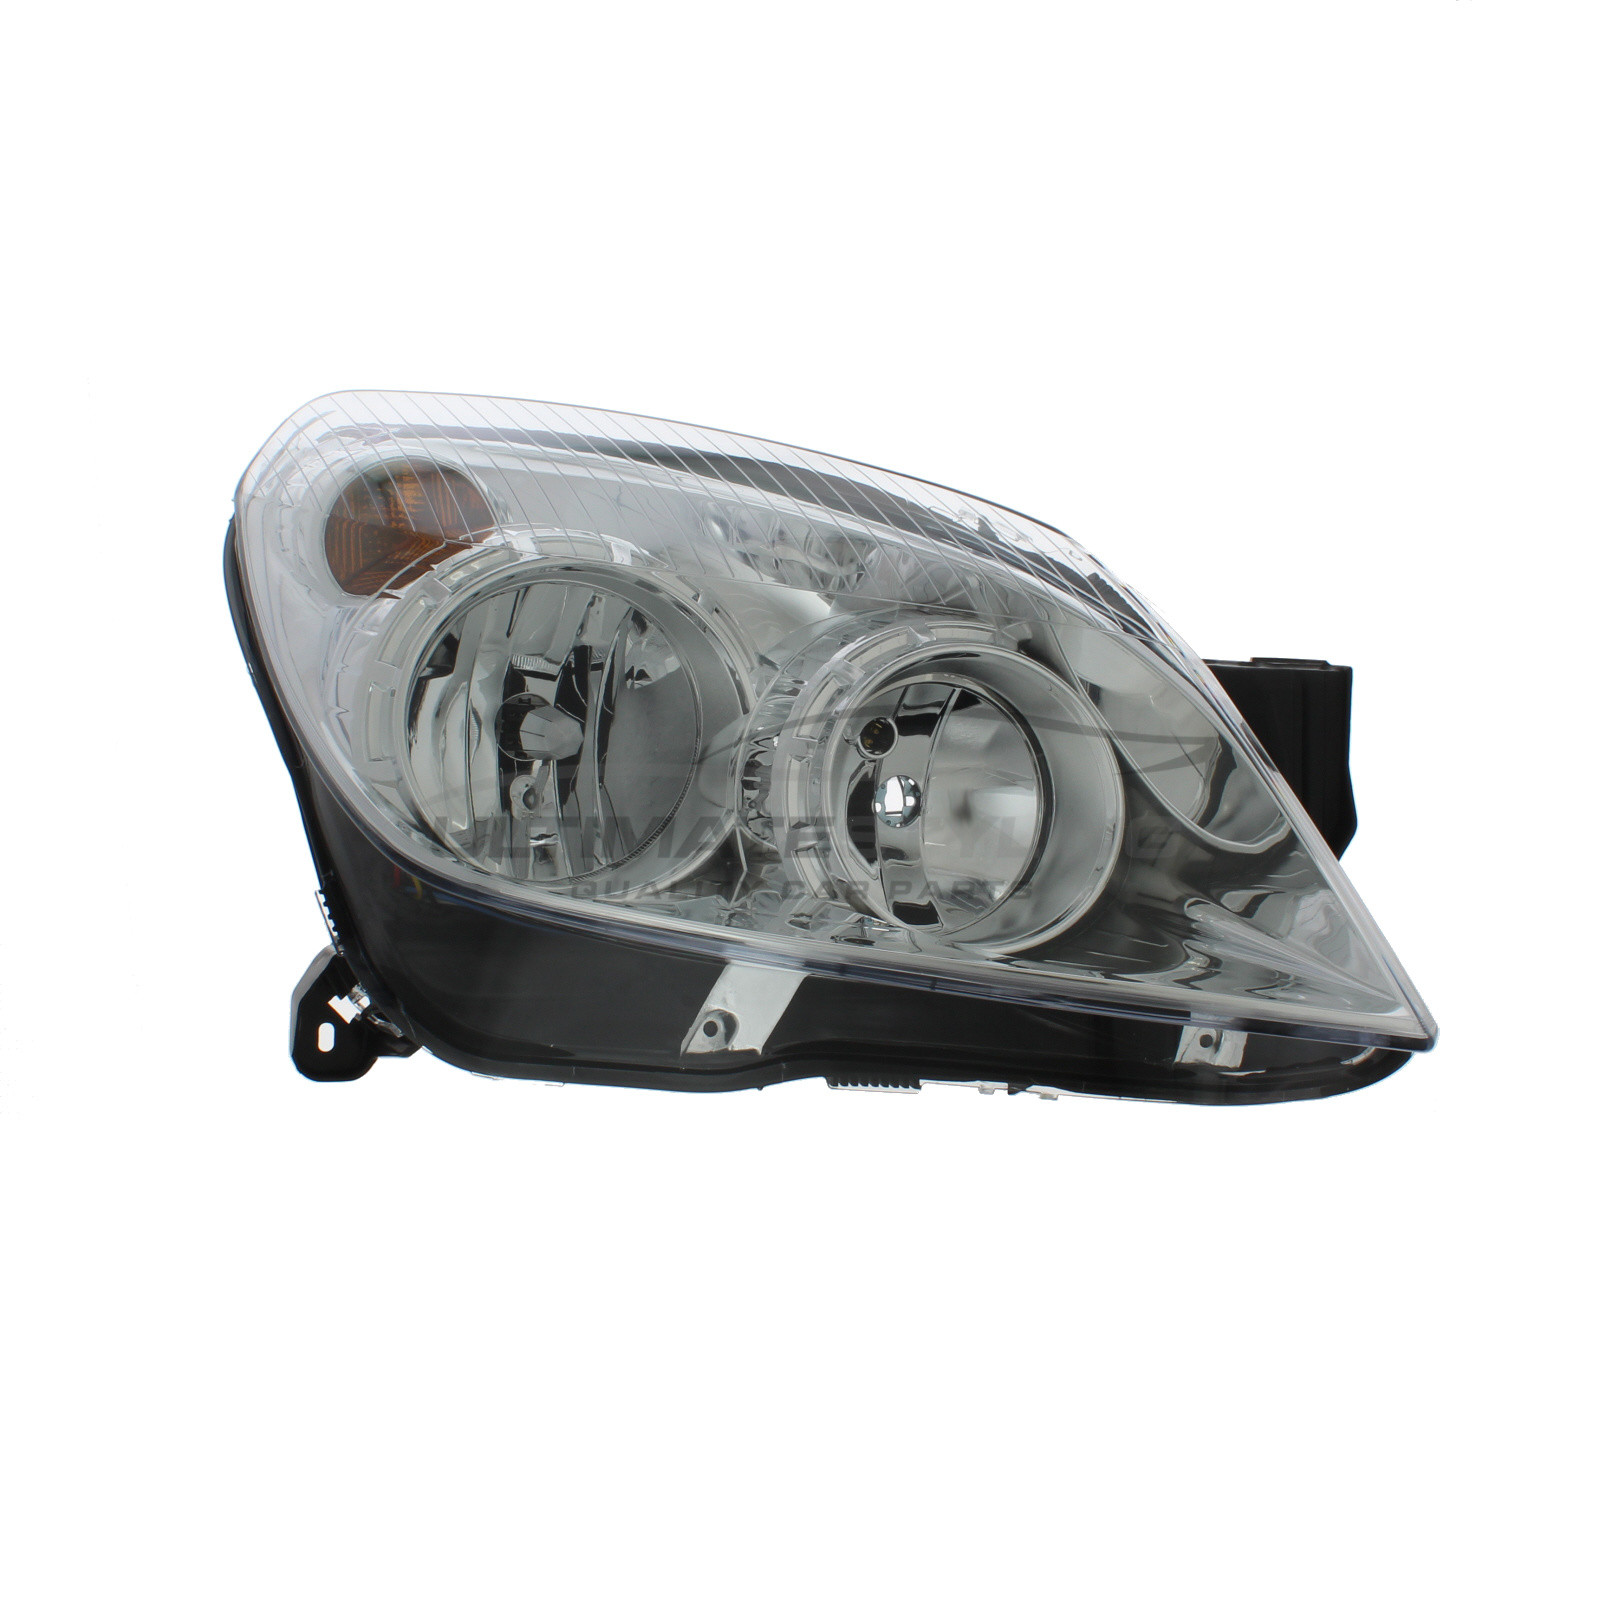 Headlight / Headlamp for Vauxhall Astra